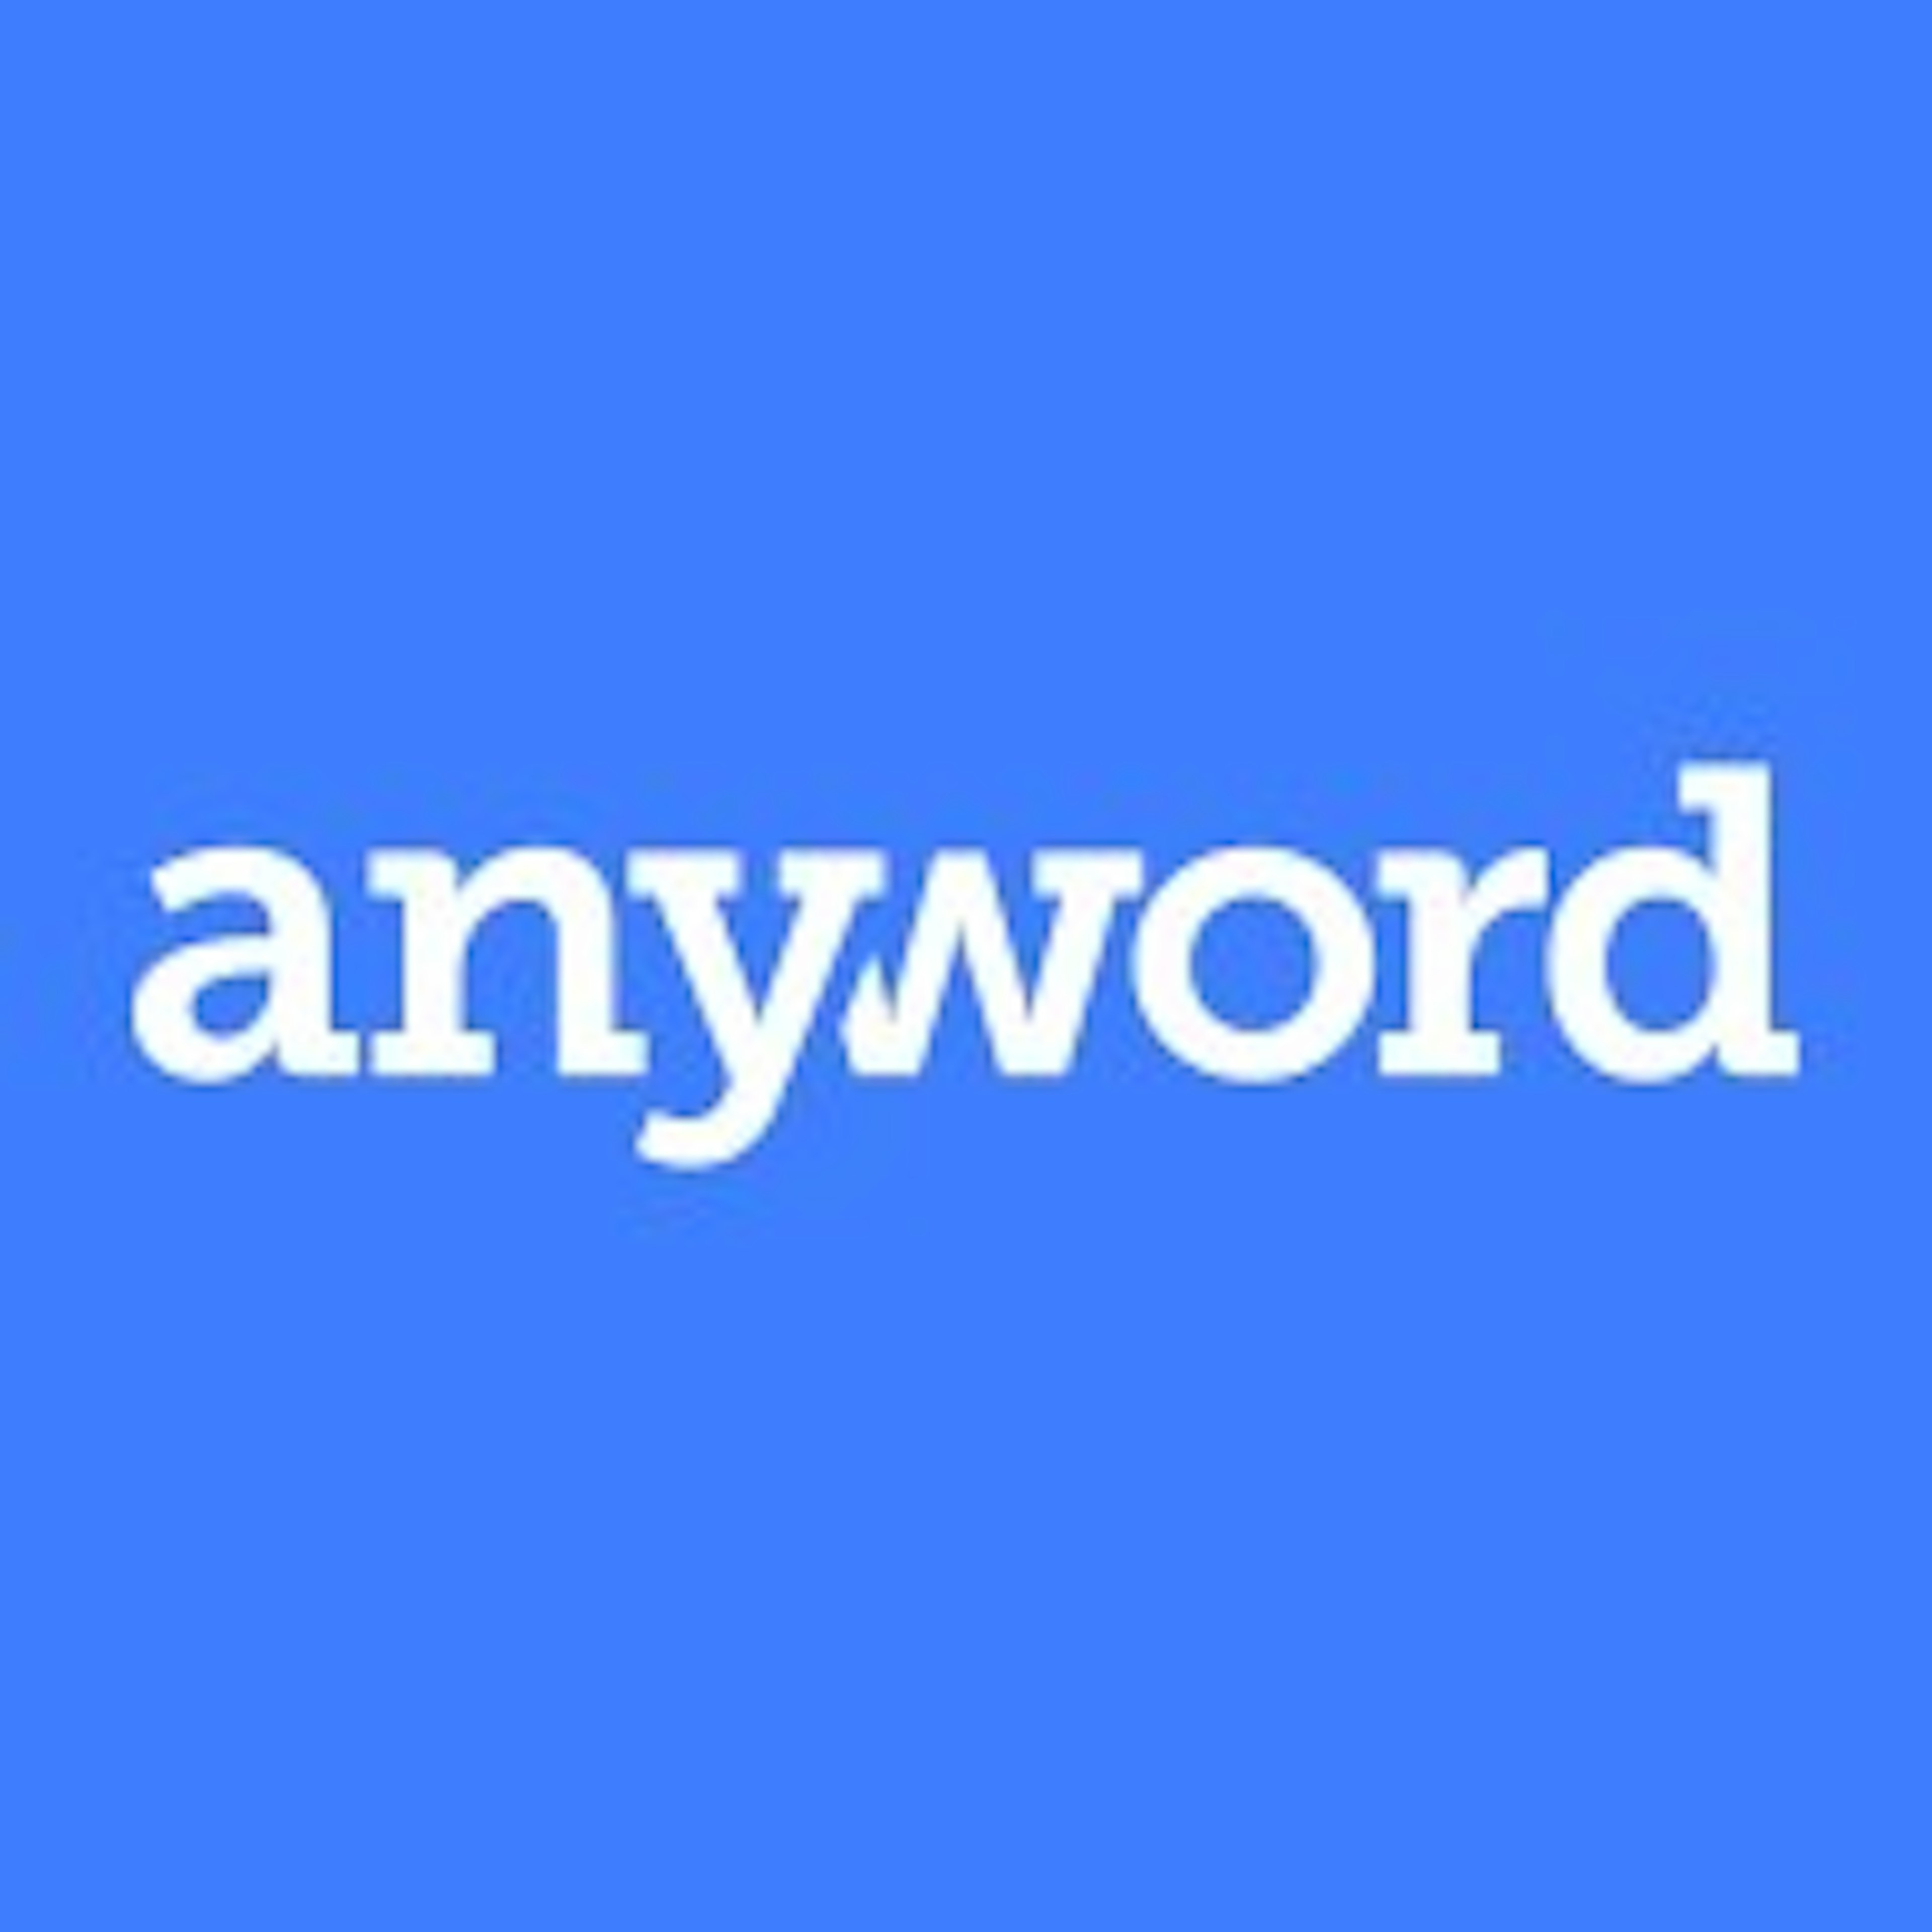 Anyword Logo